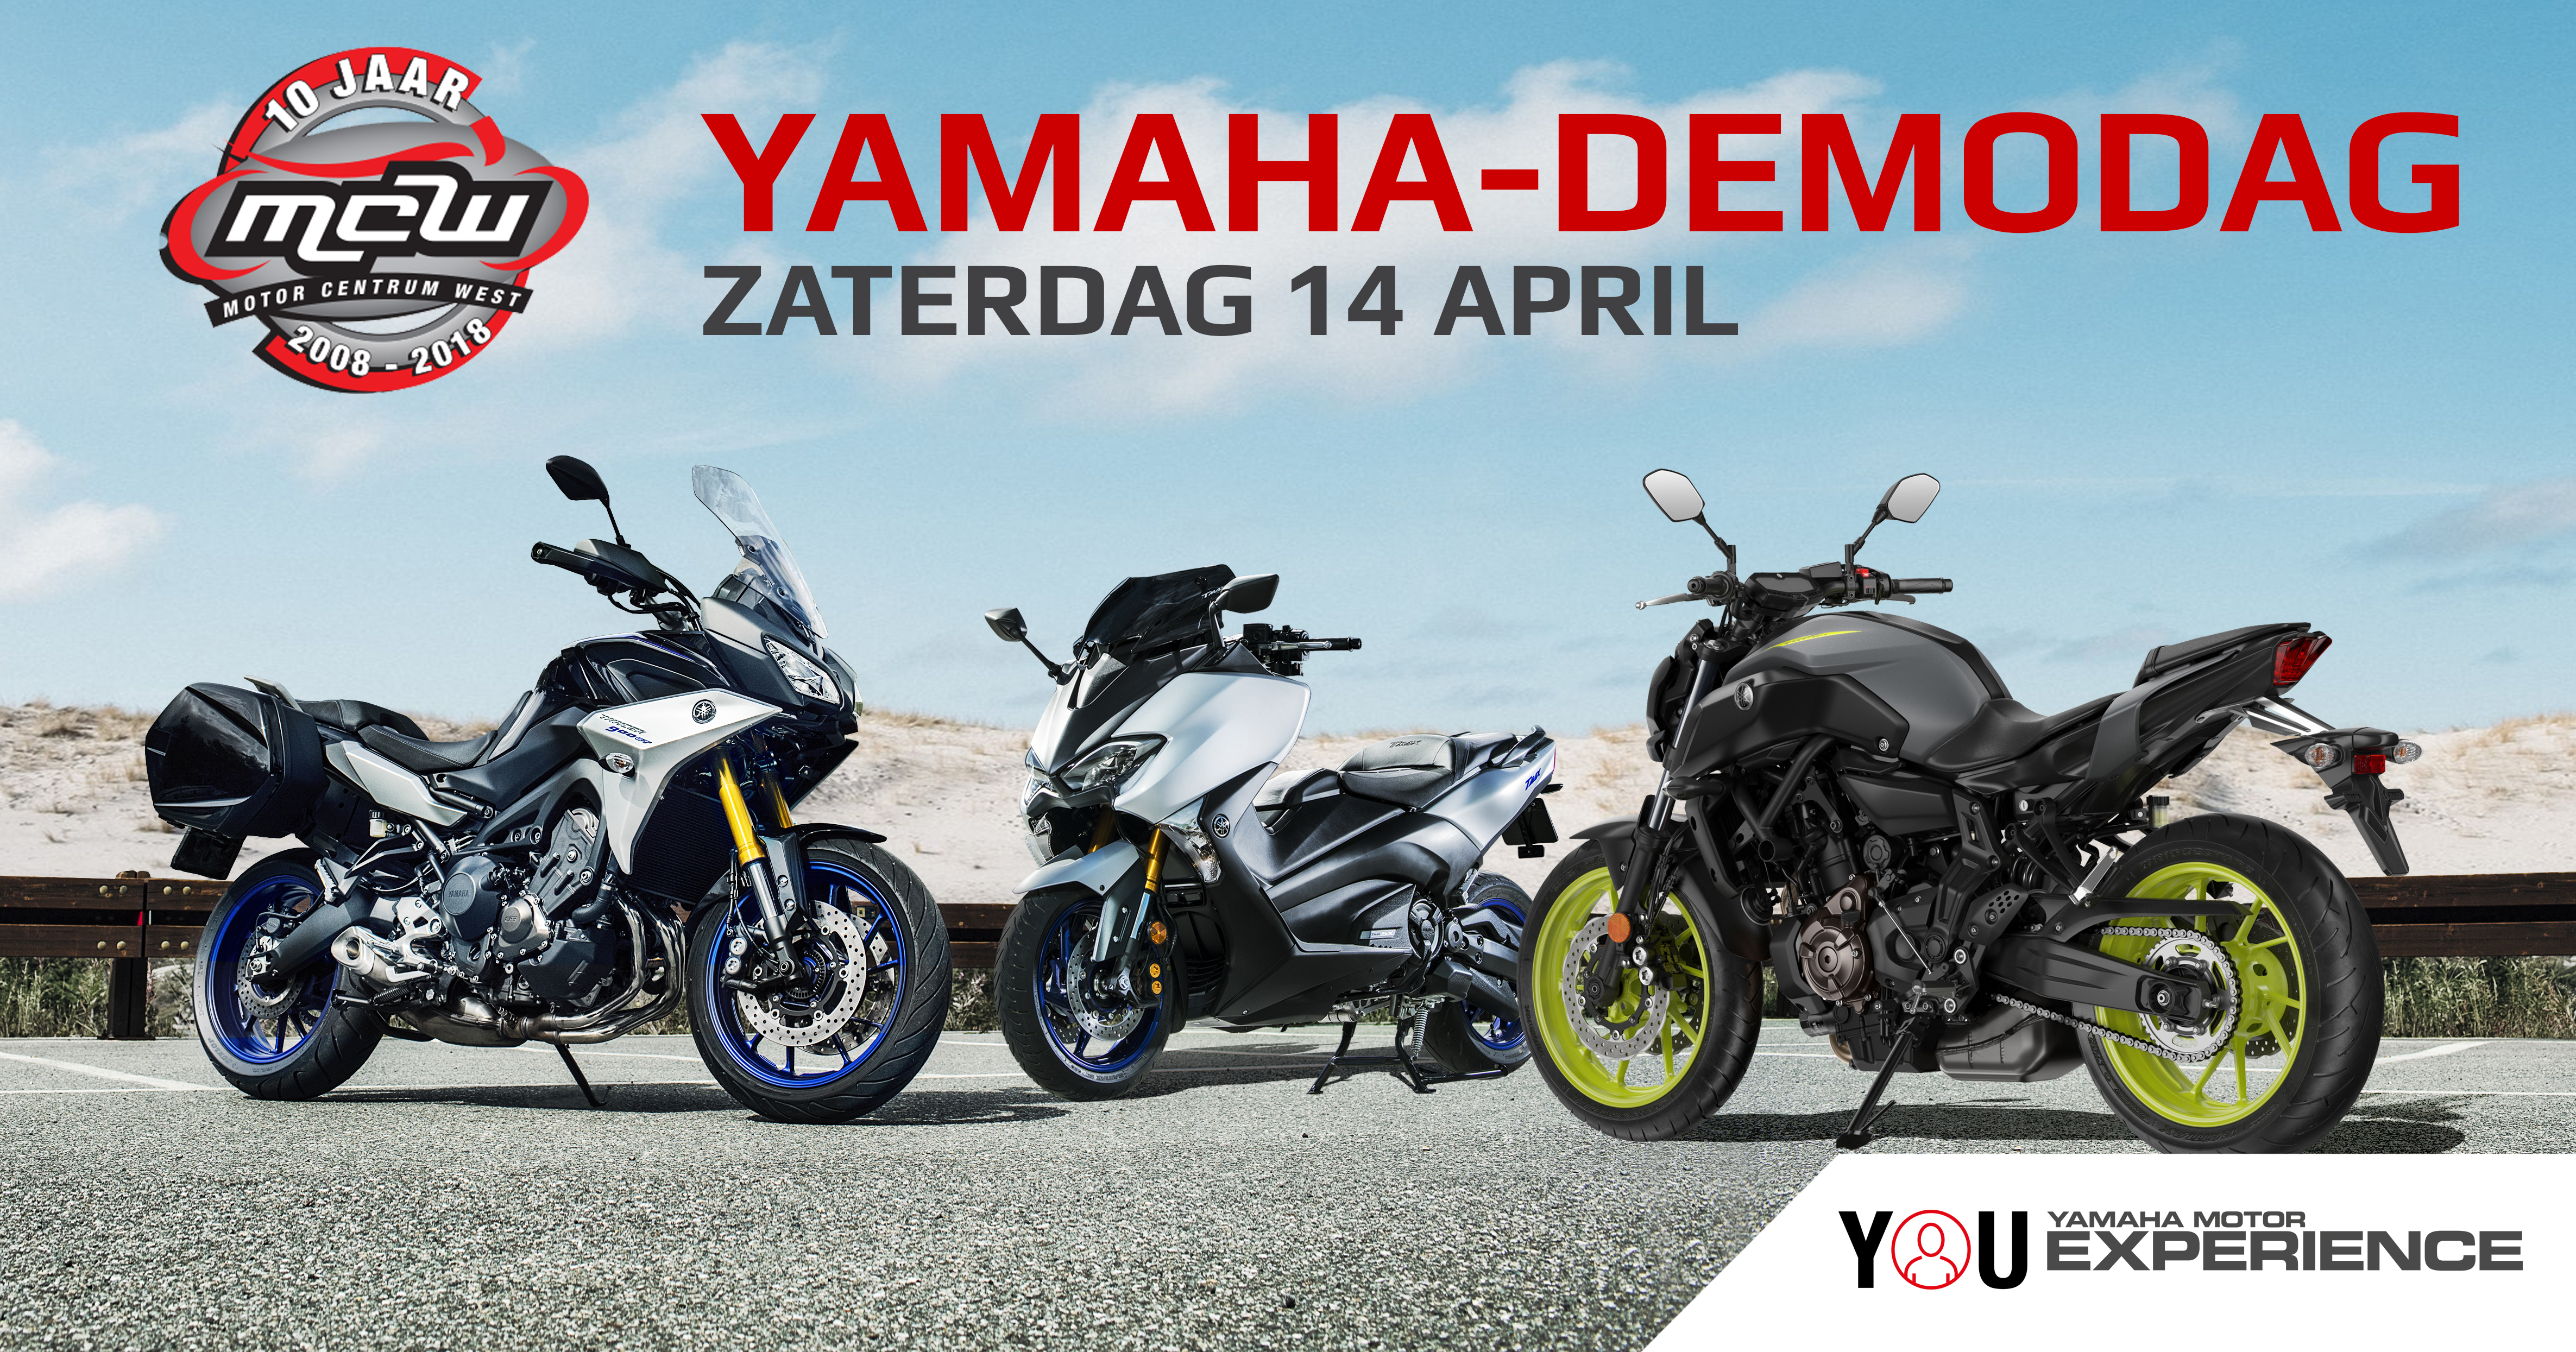 Yamaha demodag - MotorCentrumWest